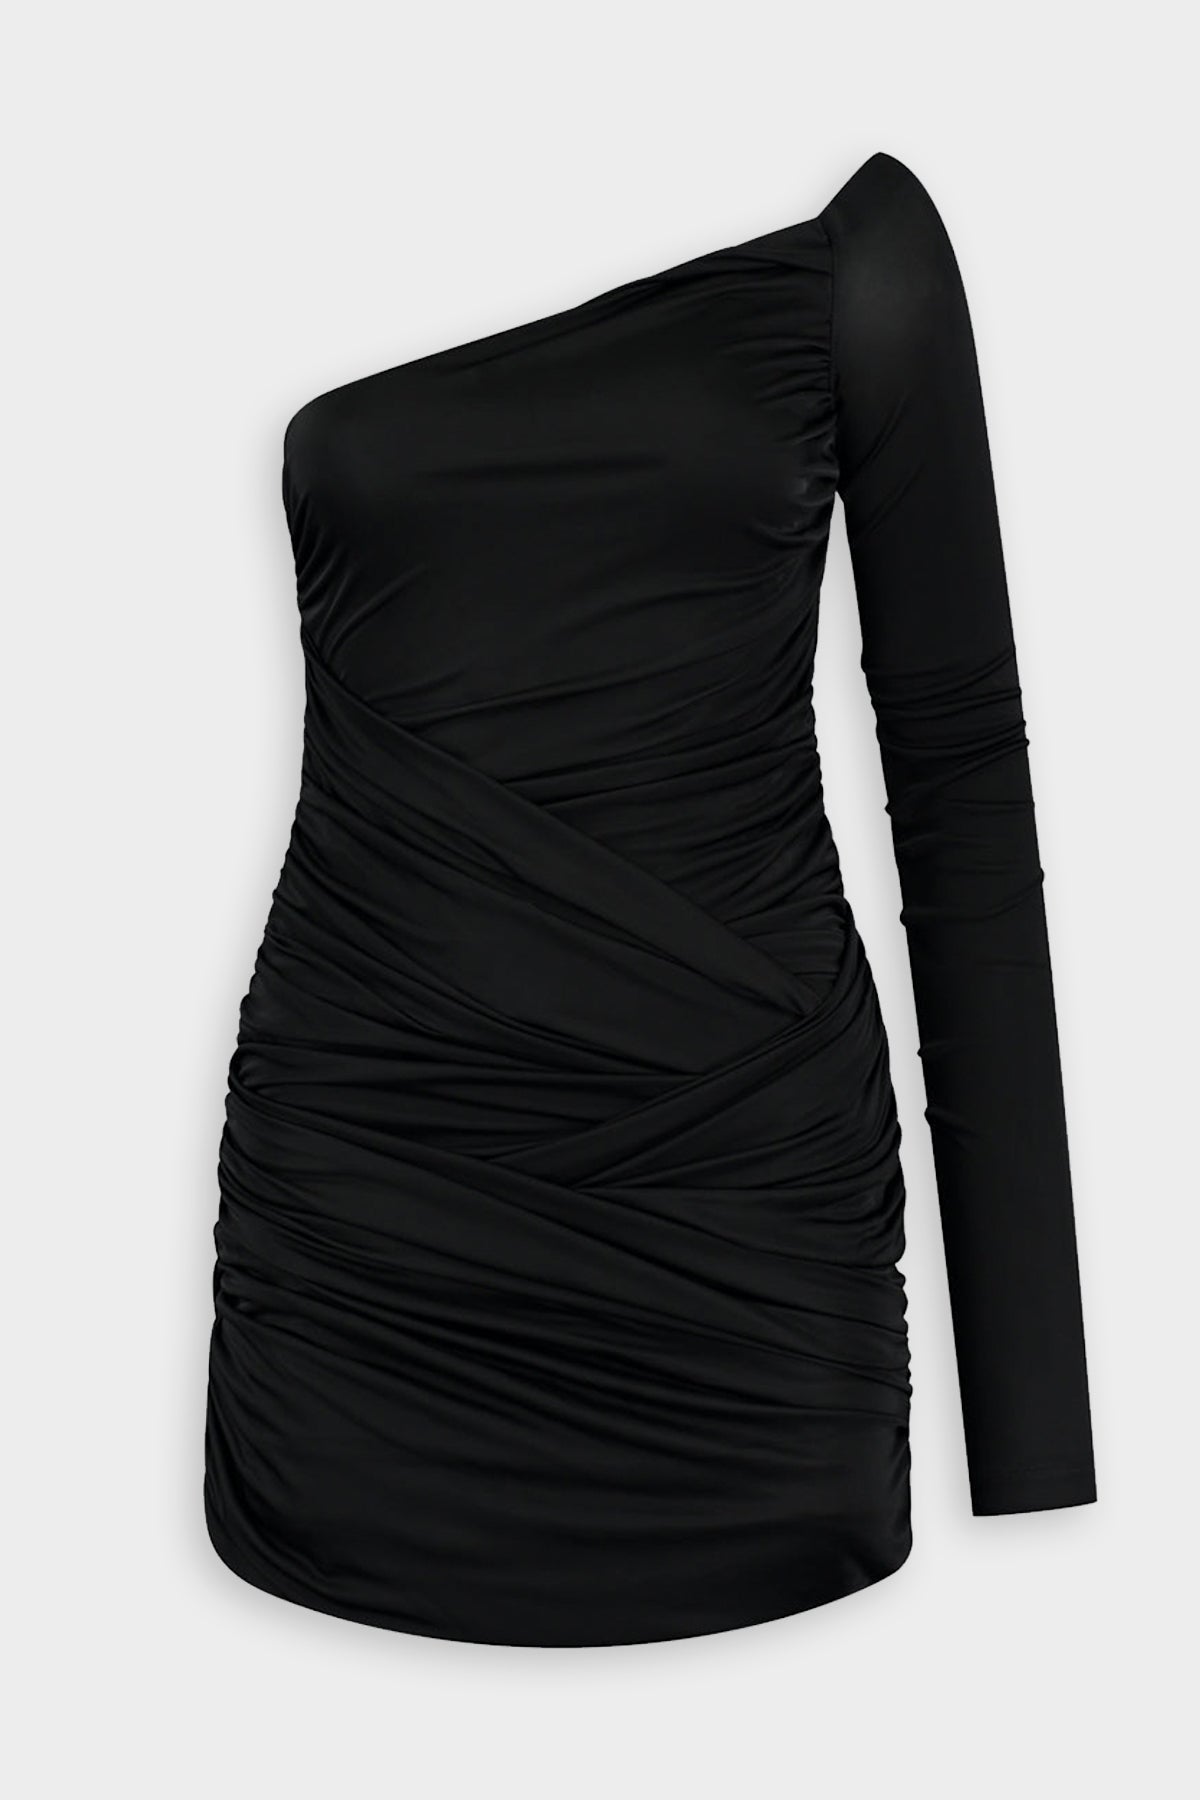 Valmiera Single Long Sleeve Asymmetric Mini Dress - shop-olivia.com